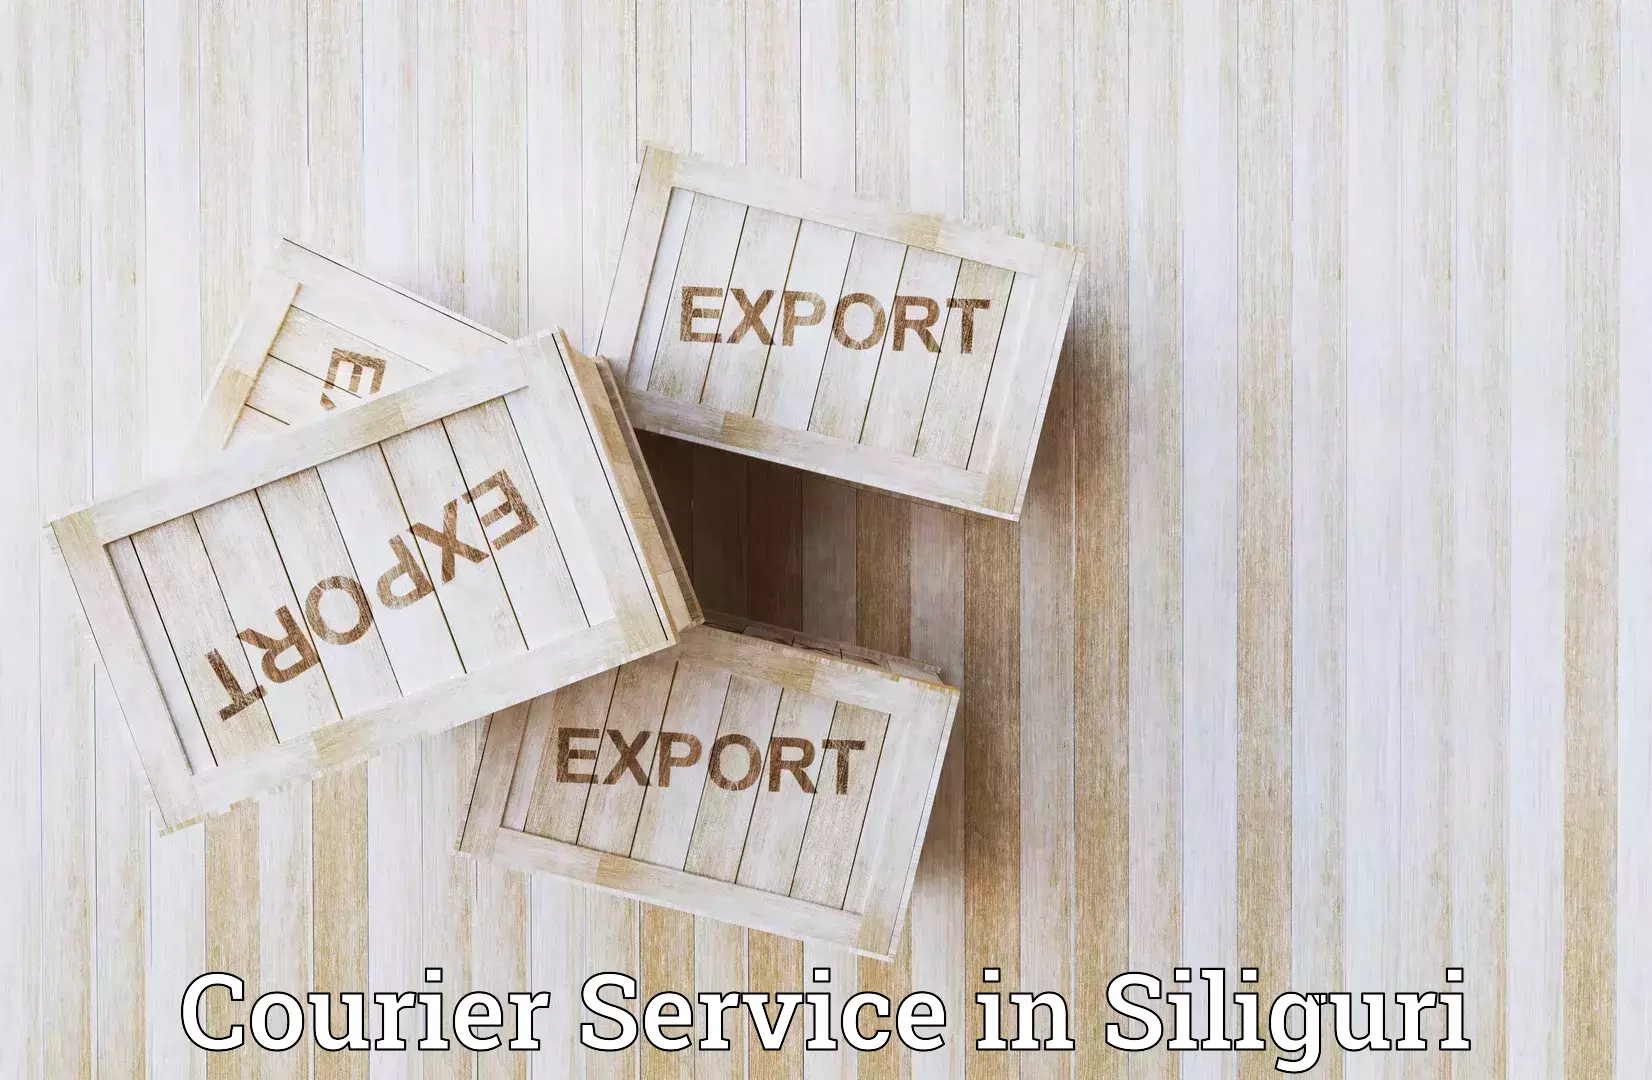 Efficient order fulfillment in Siliguri